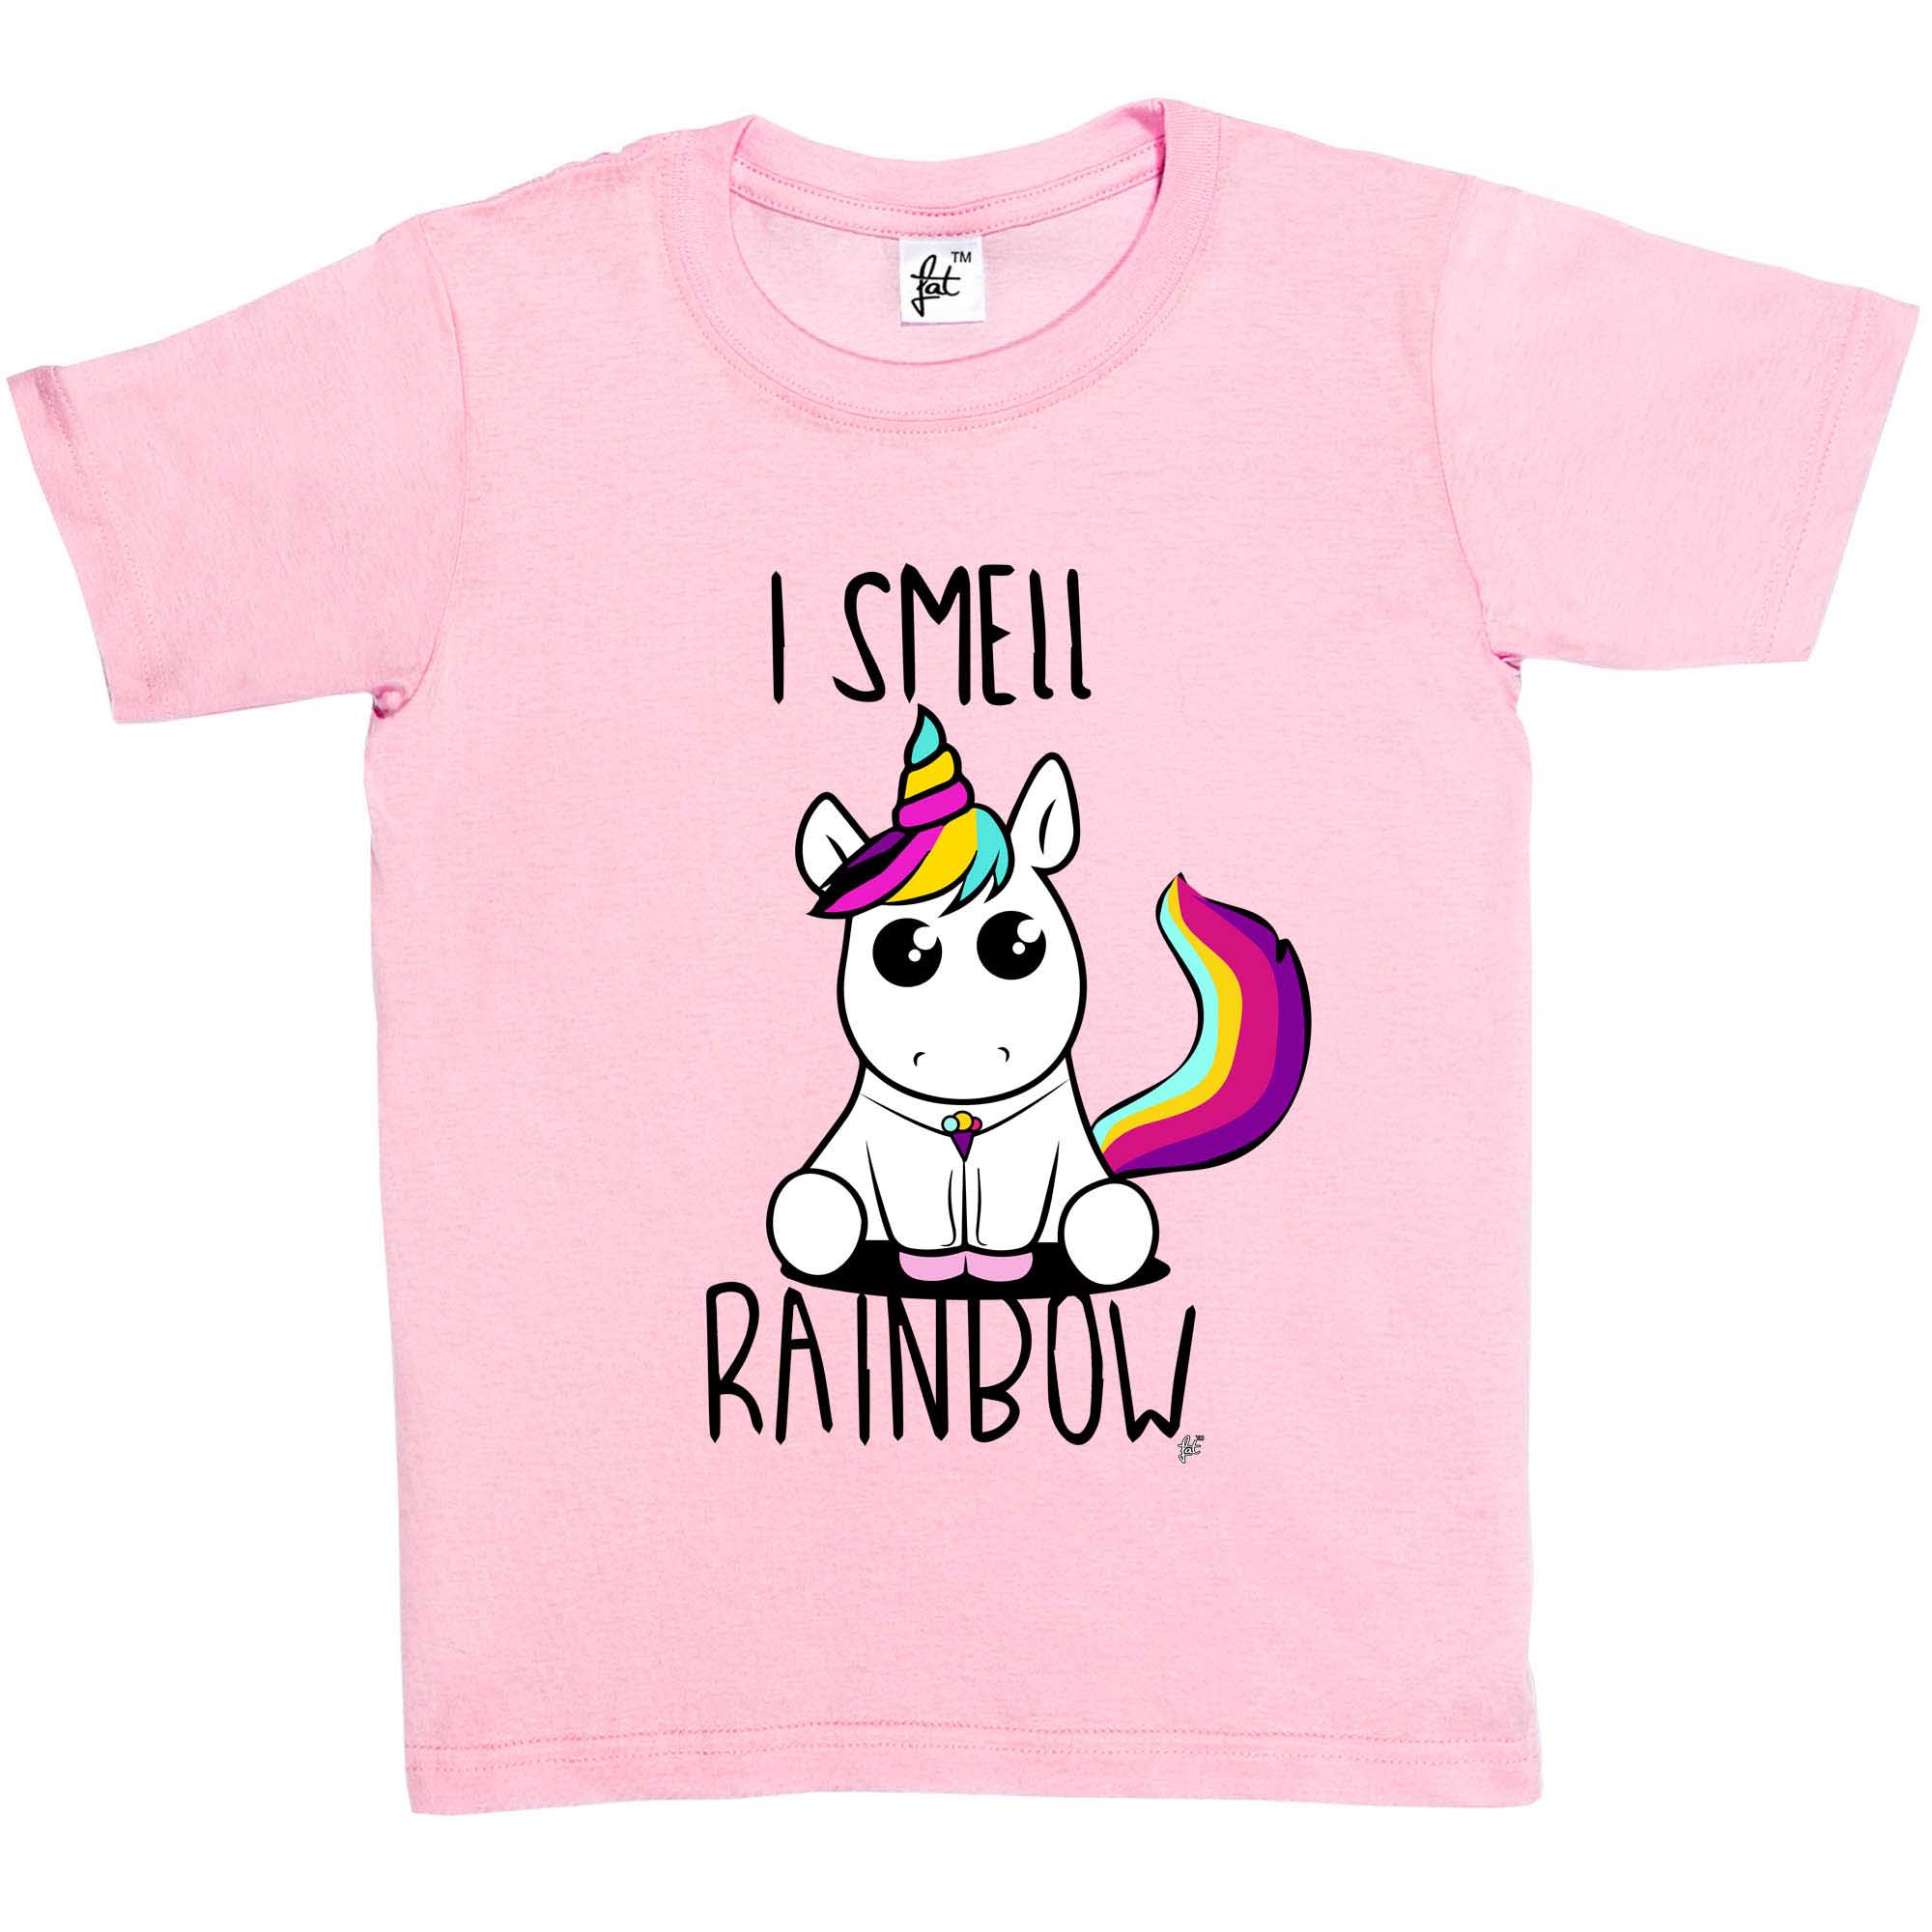 I Smell Rainbow Cute Kawaii Unicorn & Rainbow Tail Kids Girls T-Shirt | eBay